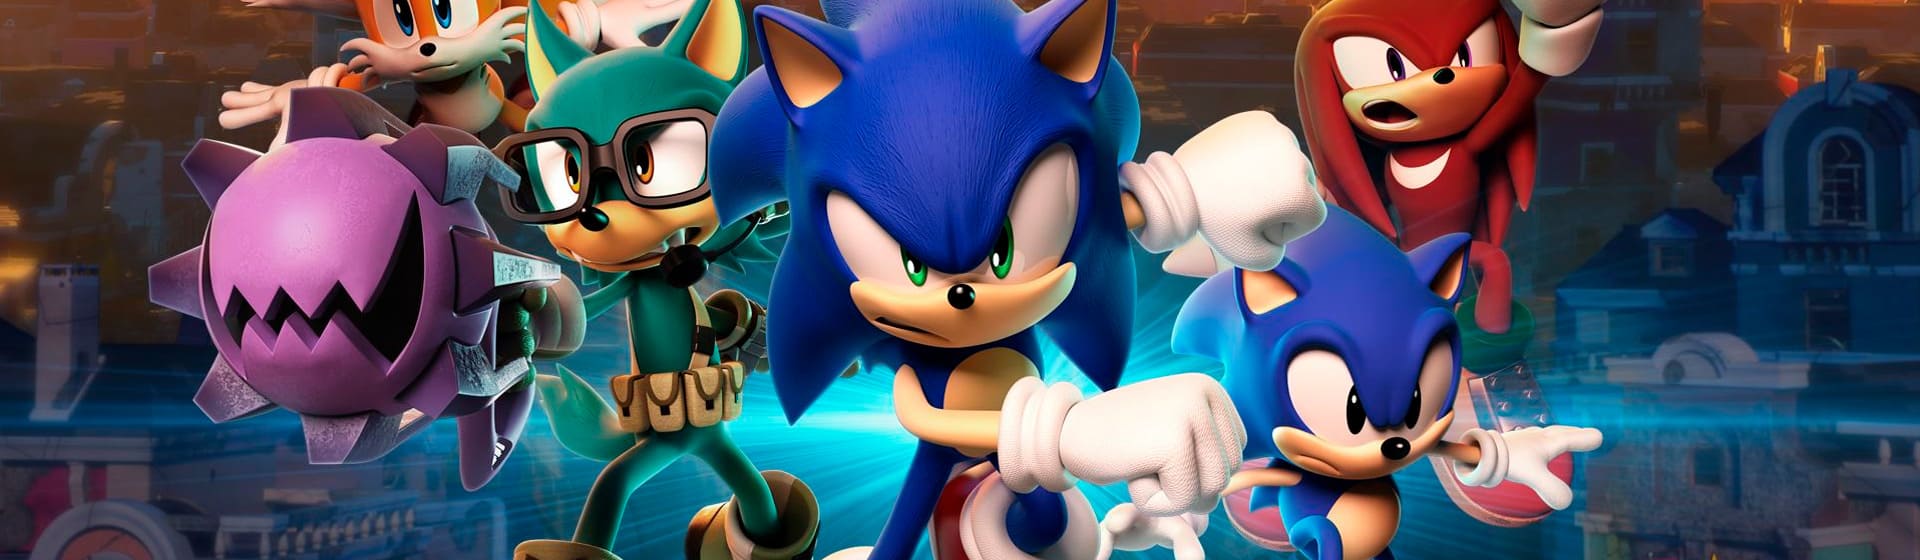 Sonic the Hedgehog - Футболки